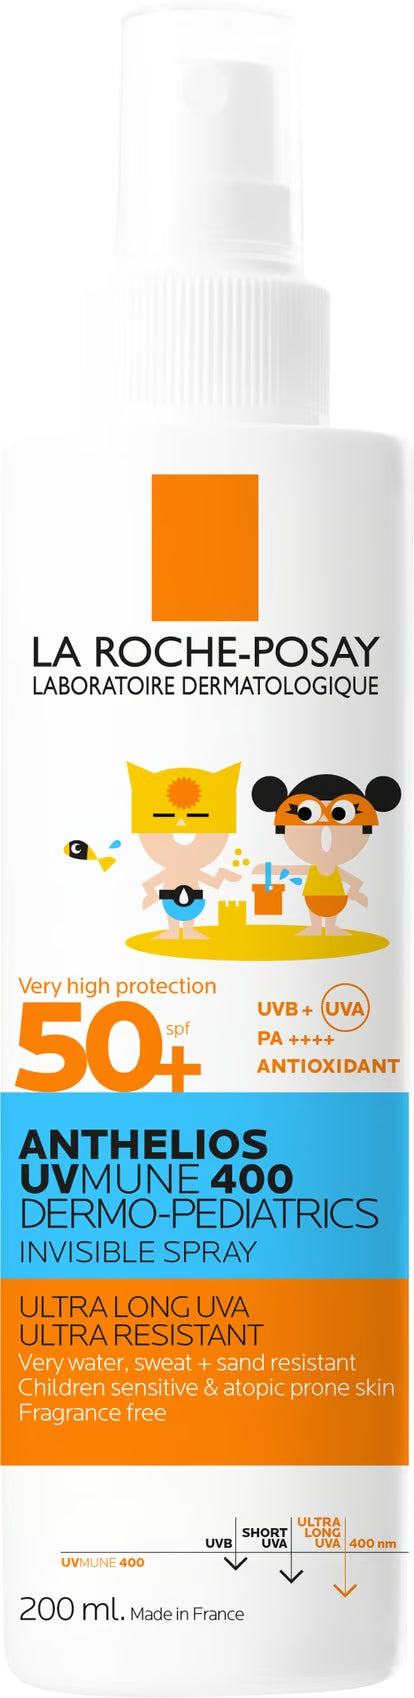 Lrp anthelios uvmune spf50+ spray - La Roche Posay - Huidproducten.nl